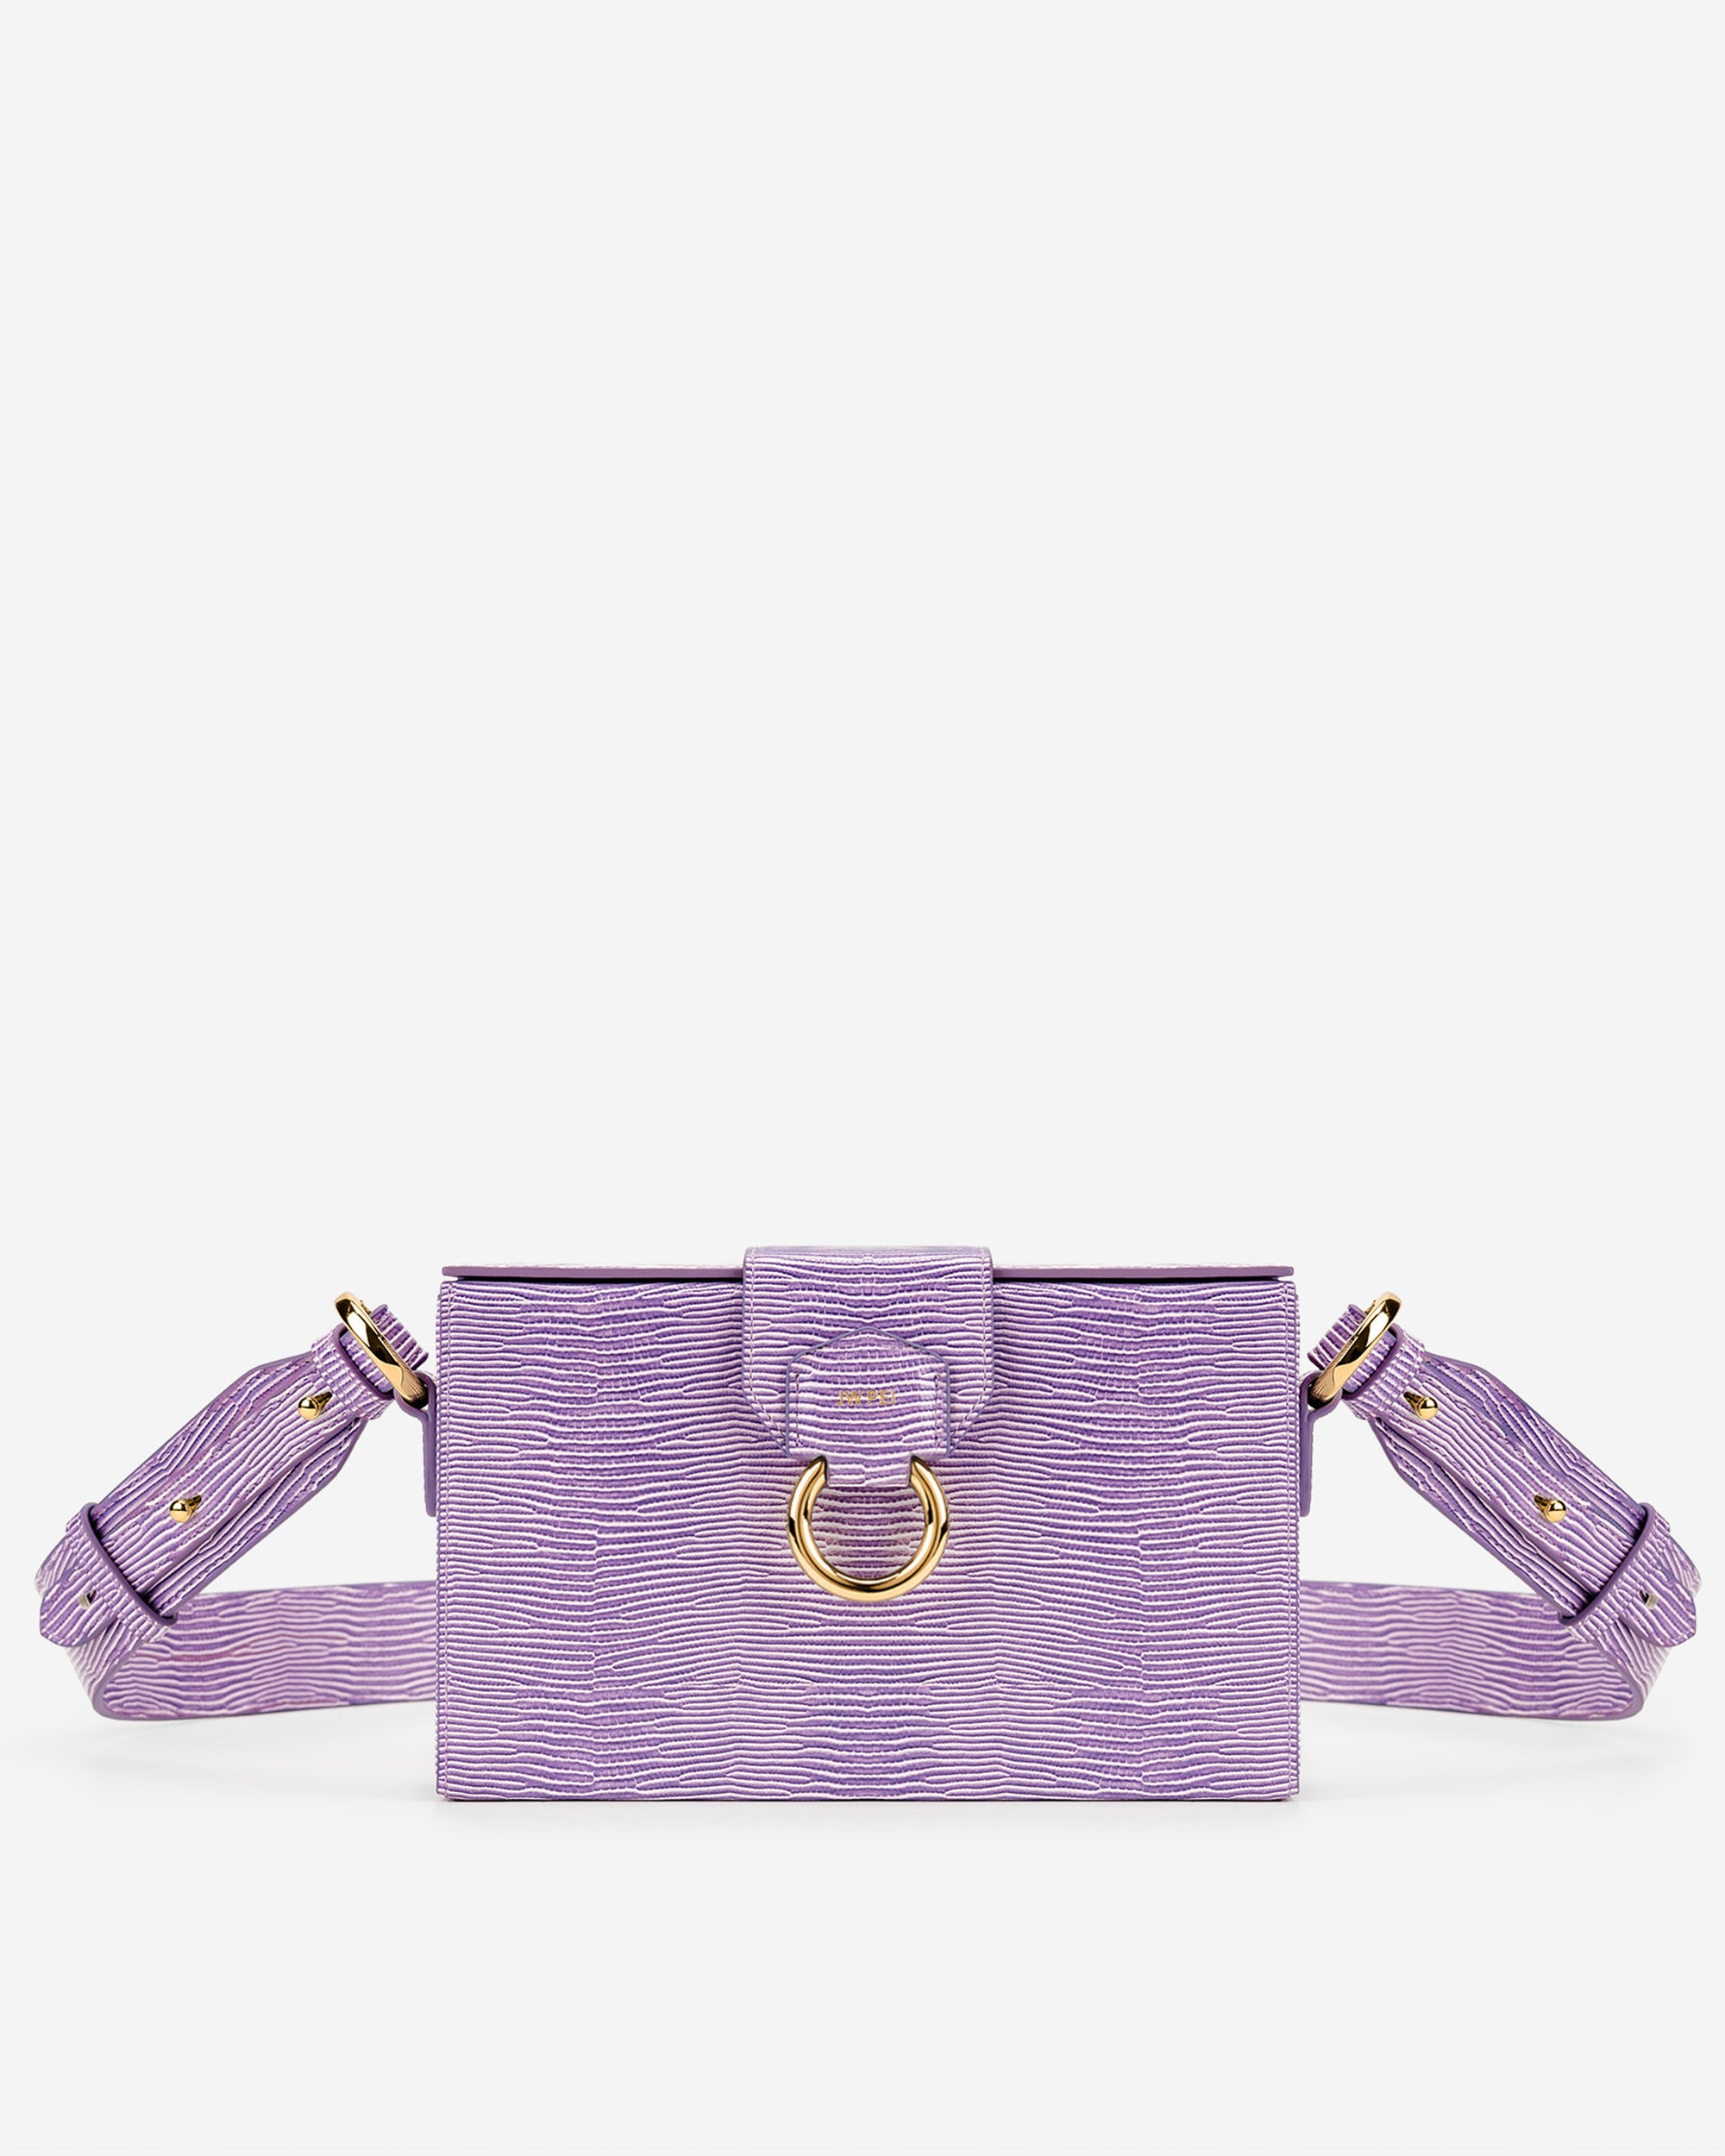 Grace 盒子包 - 紫色蜥蜴紋